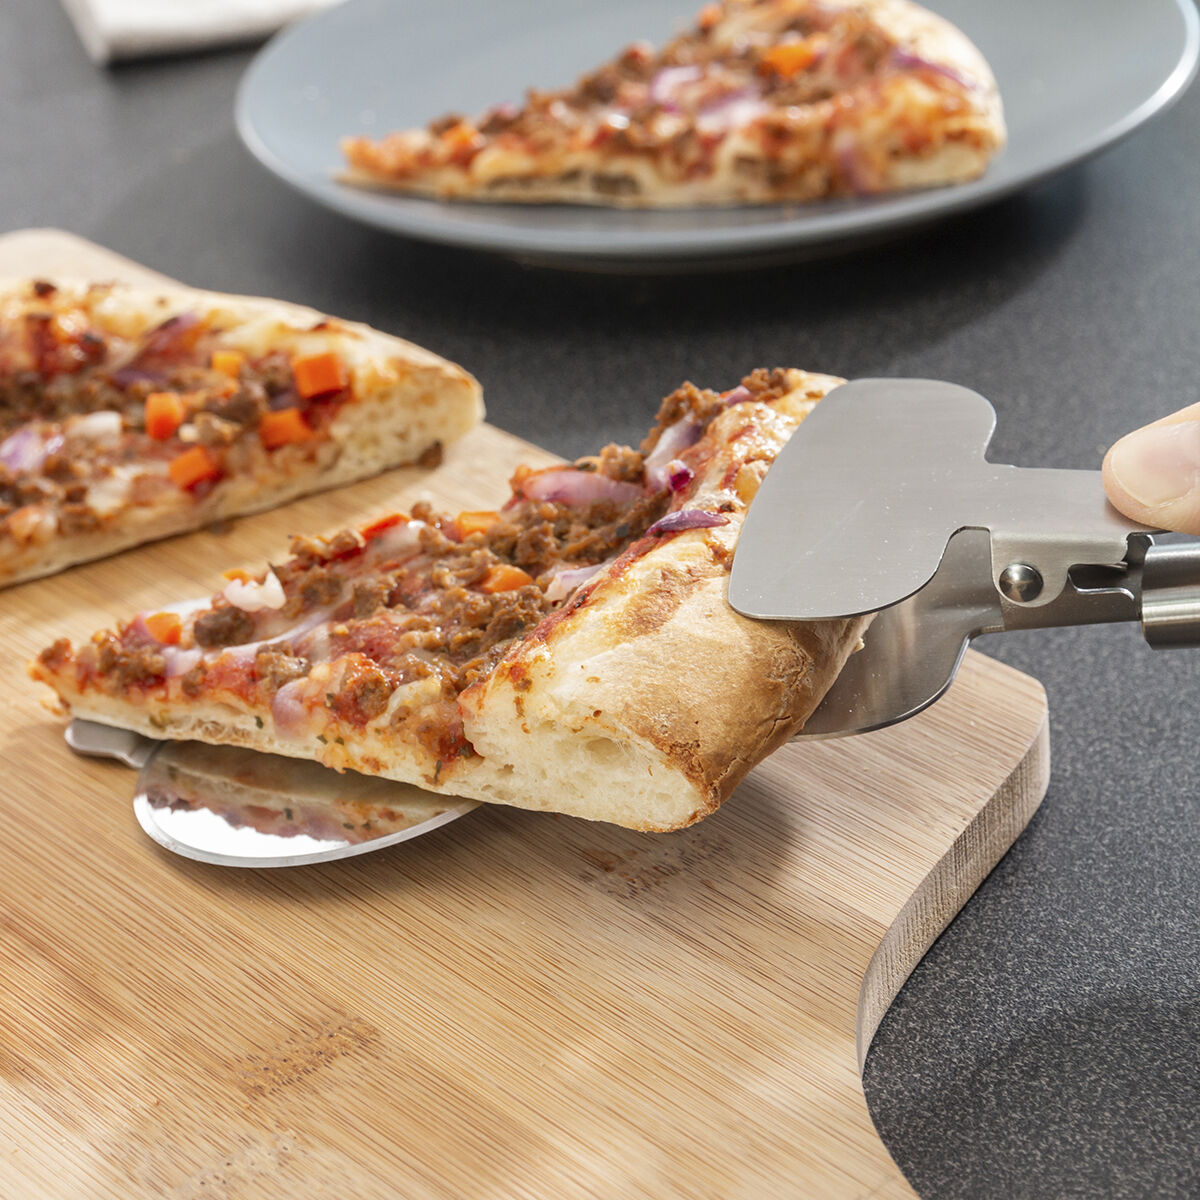 Резак для пиццы 4-in-1 Nice Slice InnovaGoods